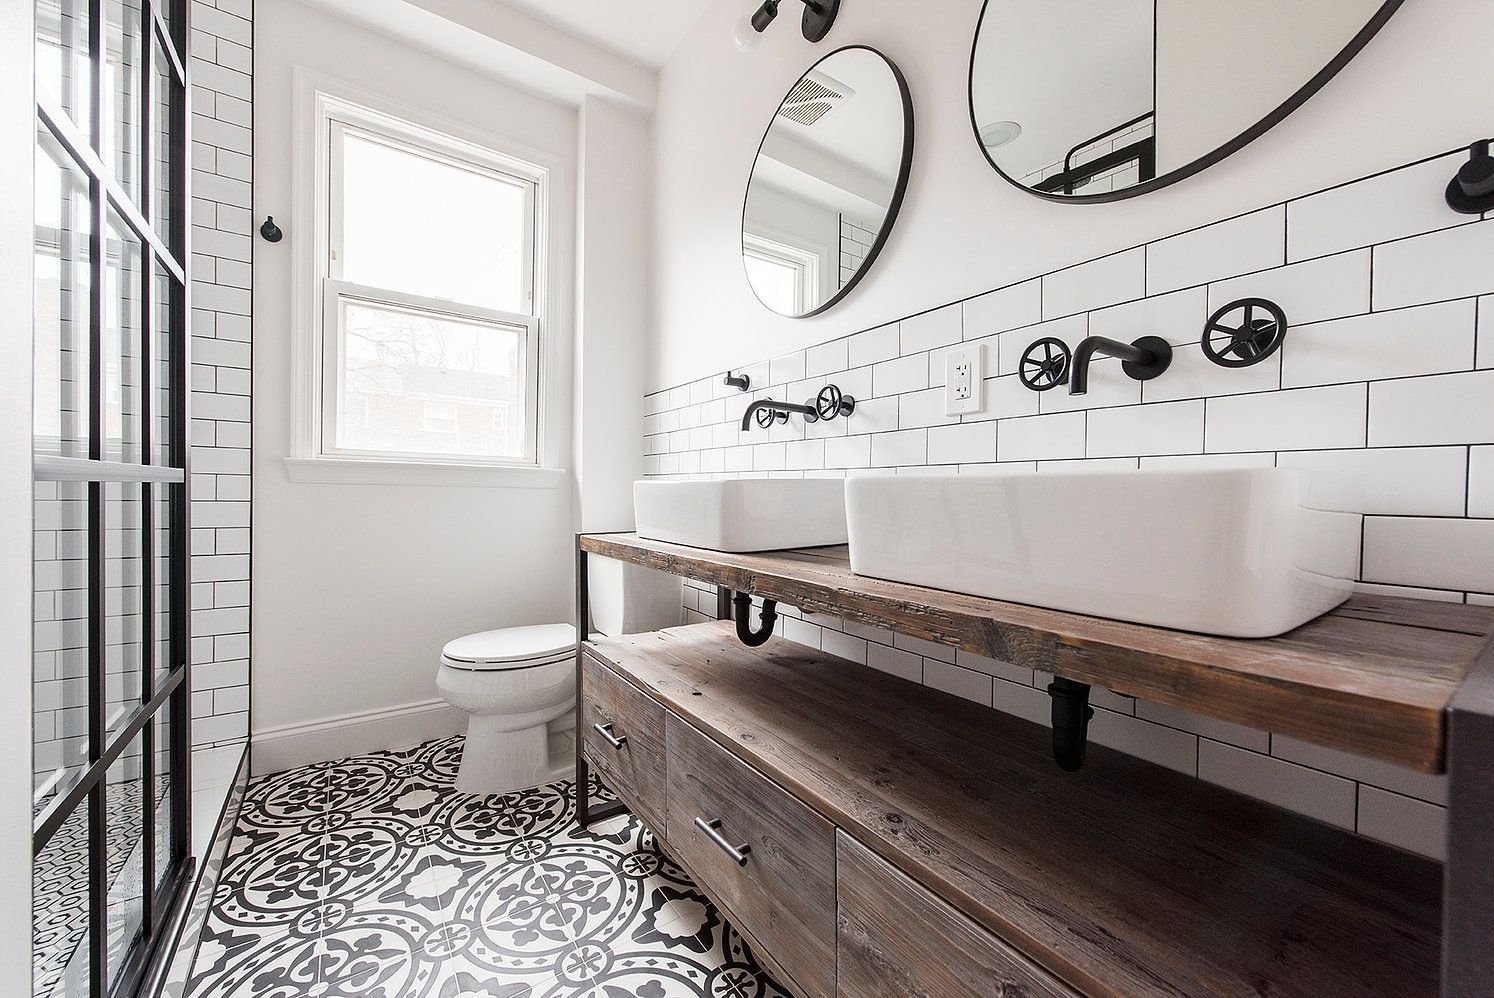 Industrial bathroom with patterned tile flooring